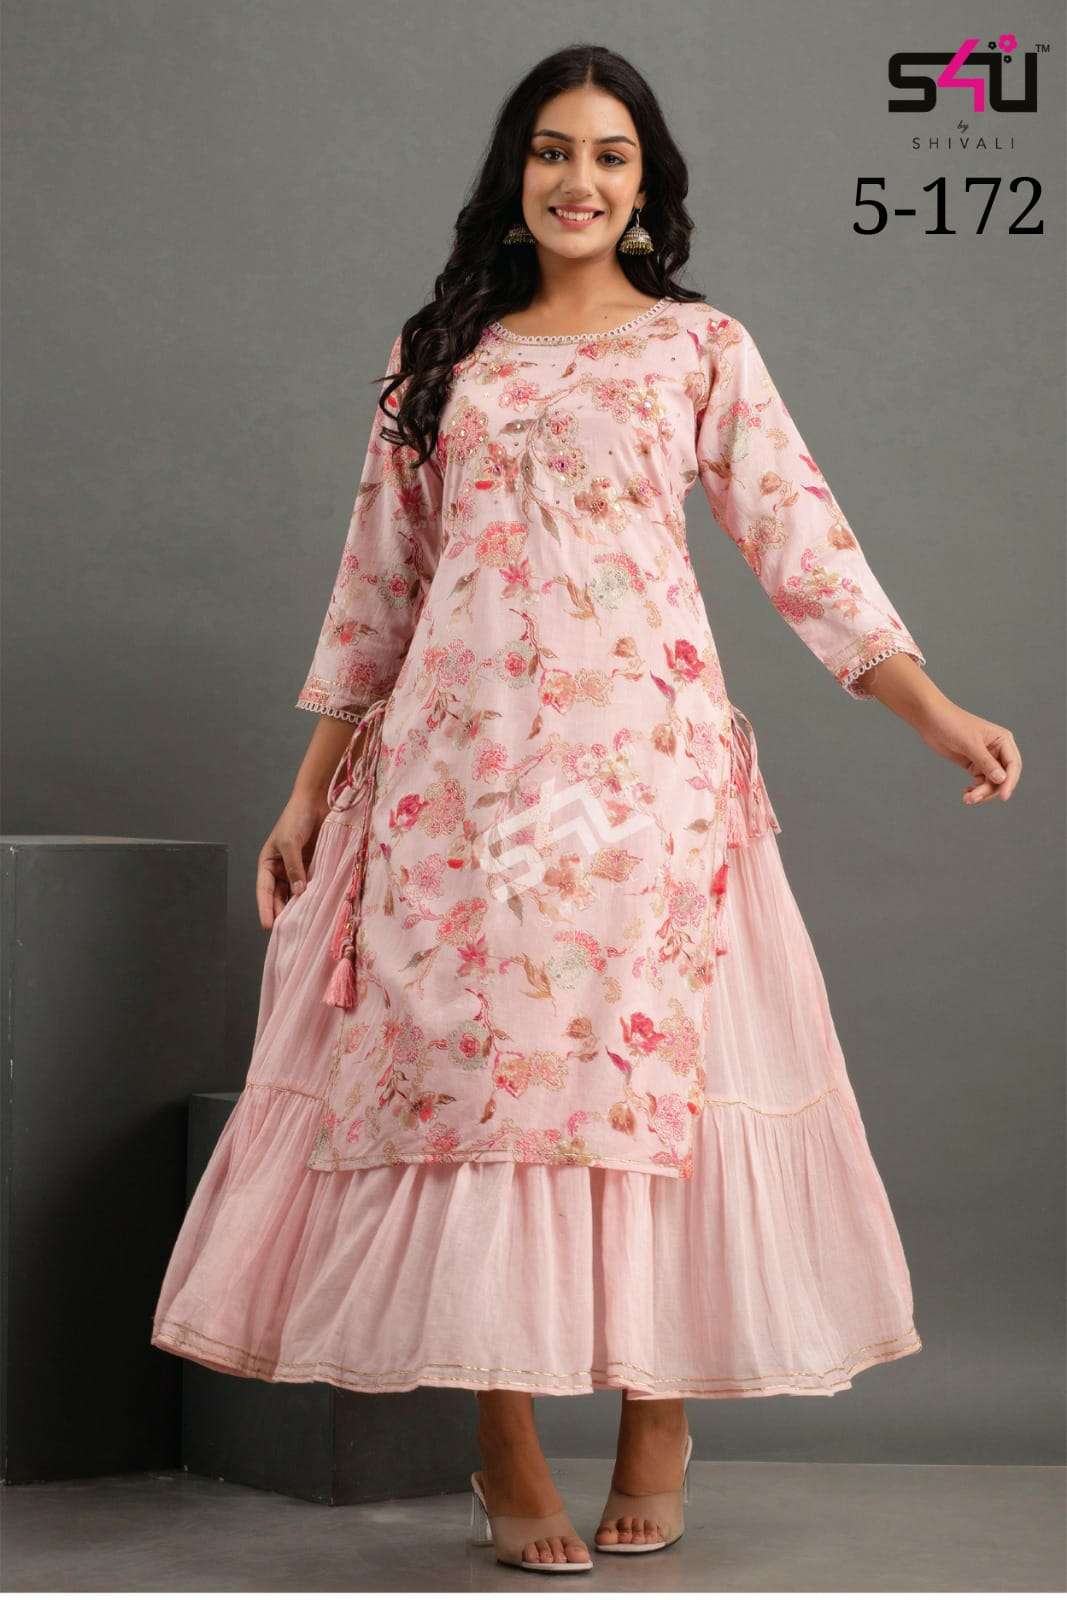 s4u shivali 5-172 design party wear designer gown kurti at wholesale price surat gujarat